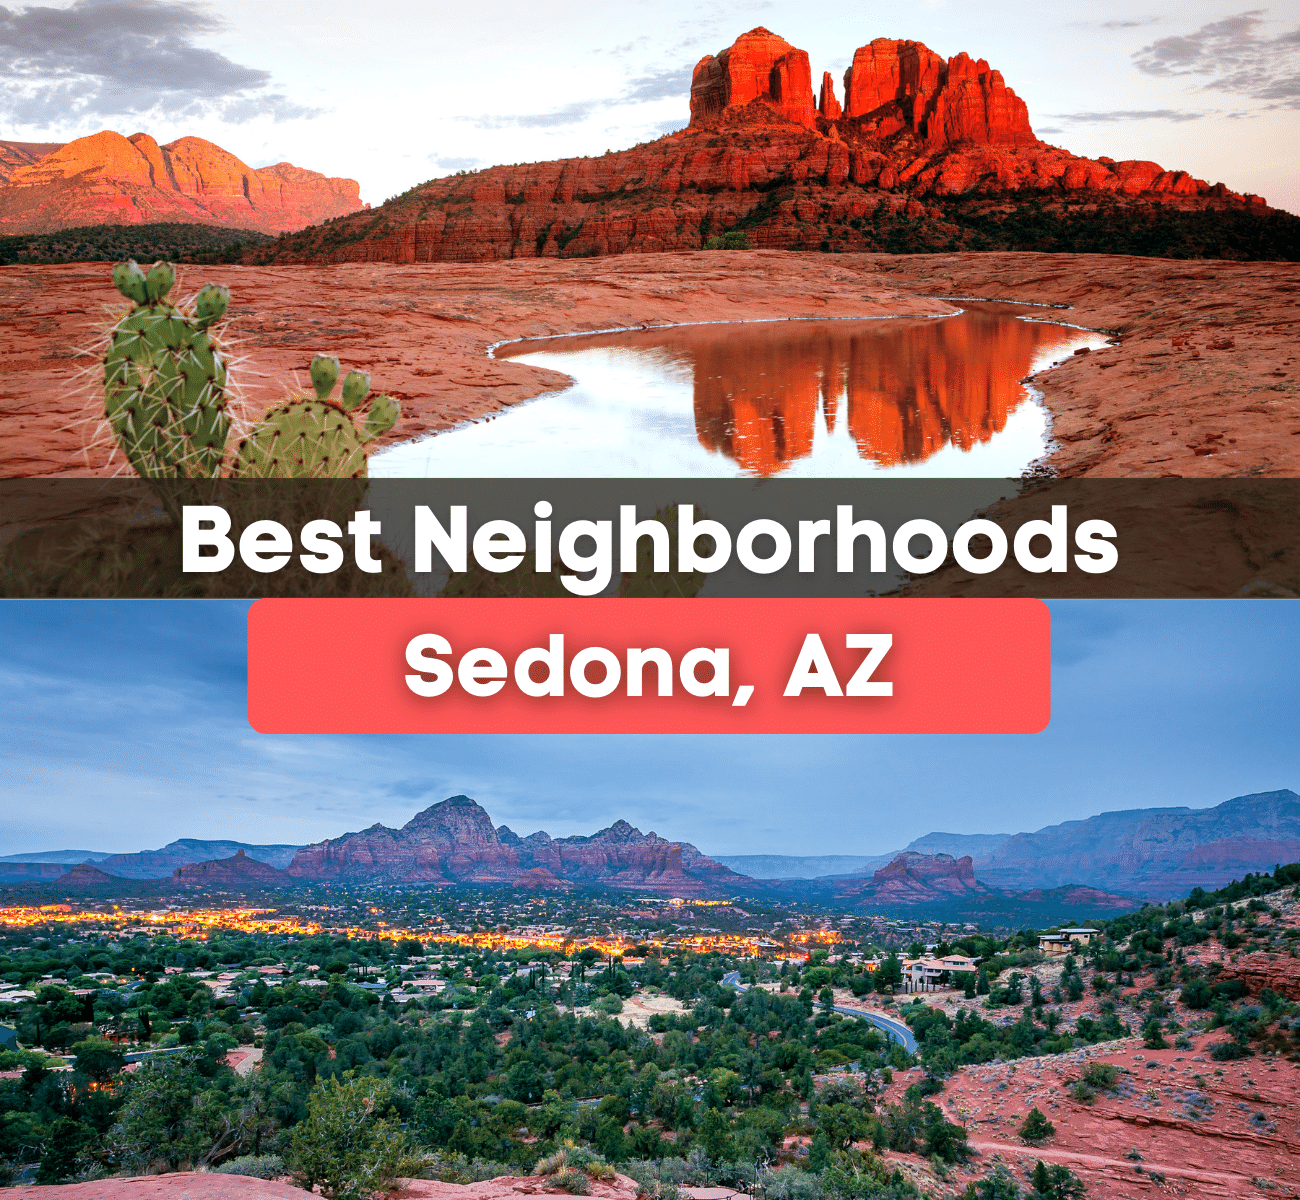 Best Neighborhoods Sedona, AZ - Sedona at night and Cathedral Rock